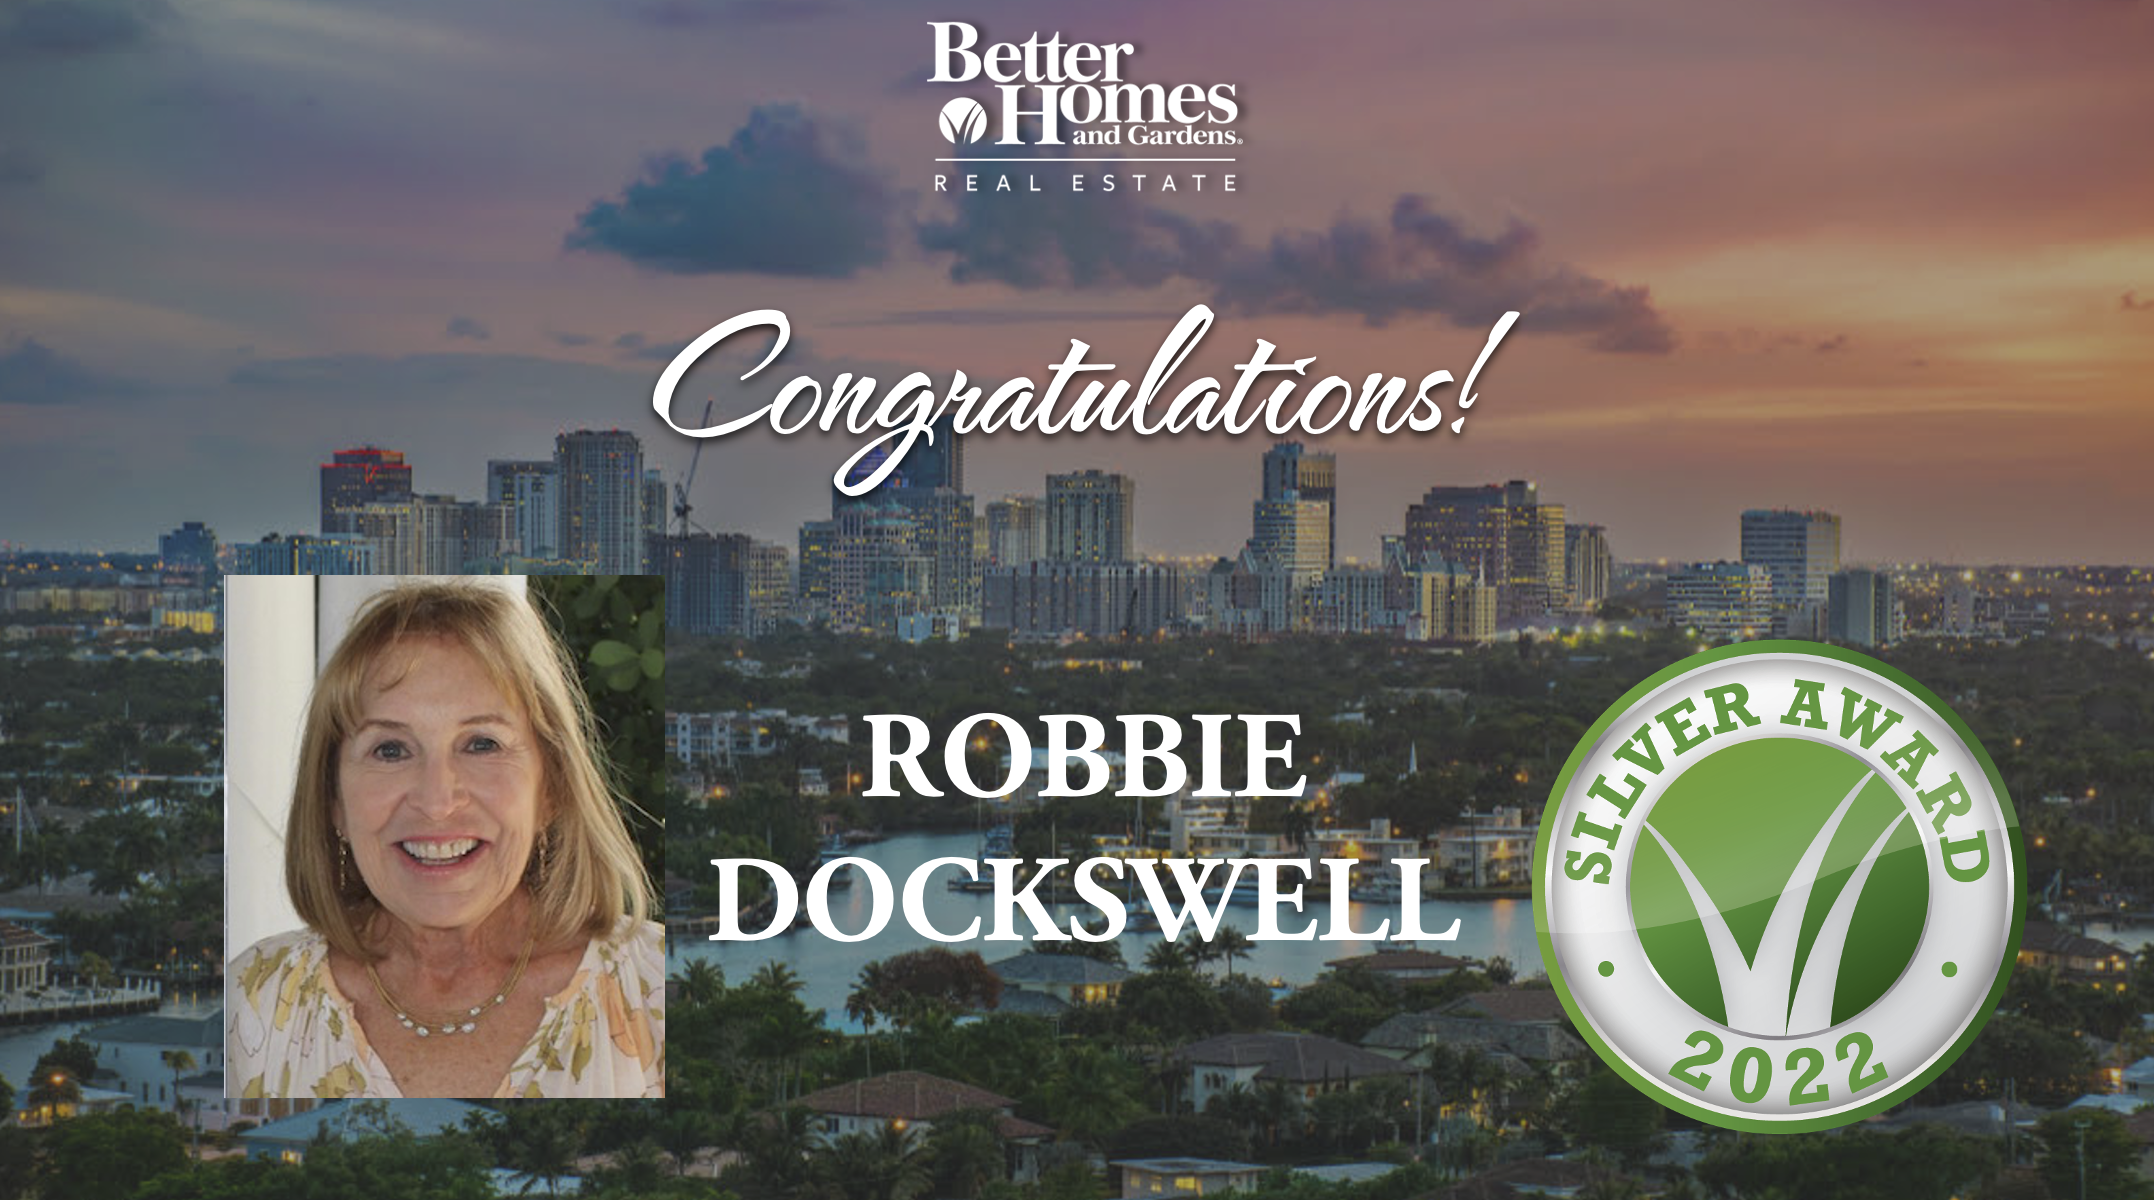 Robbie-Dockswell-Award-1.png